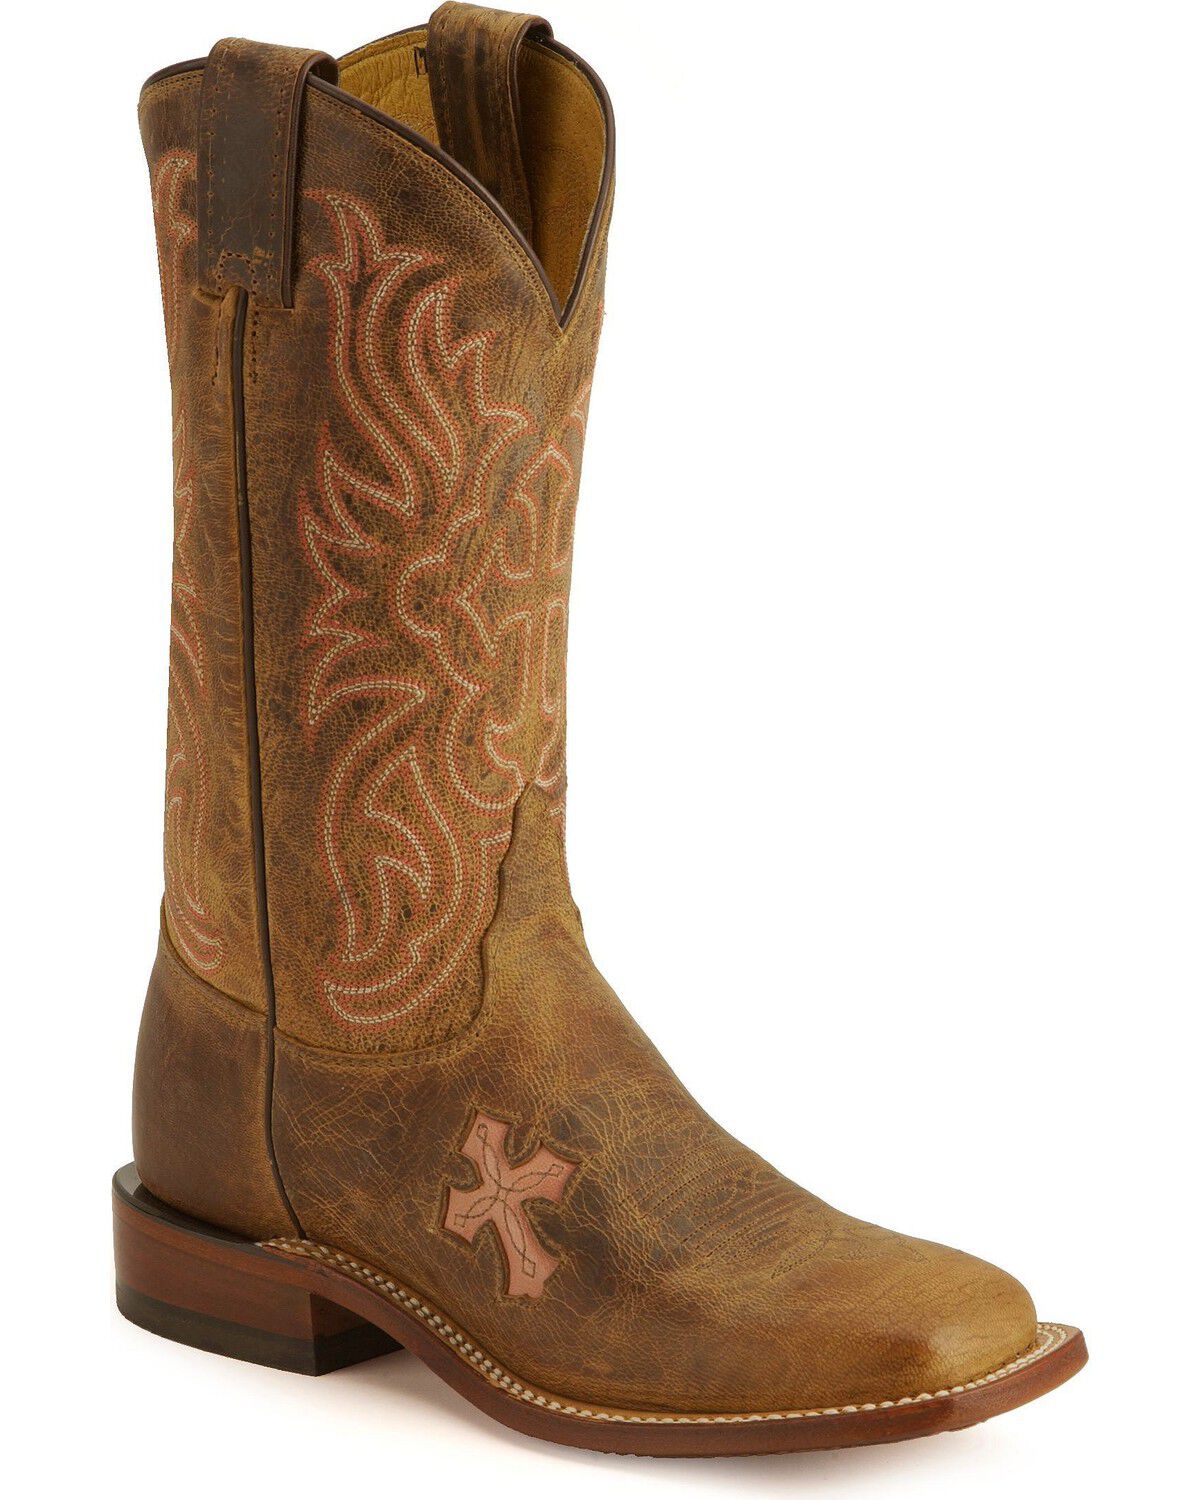 tony lama boots on sale